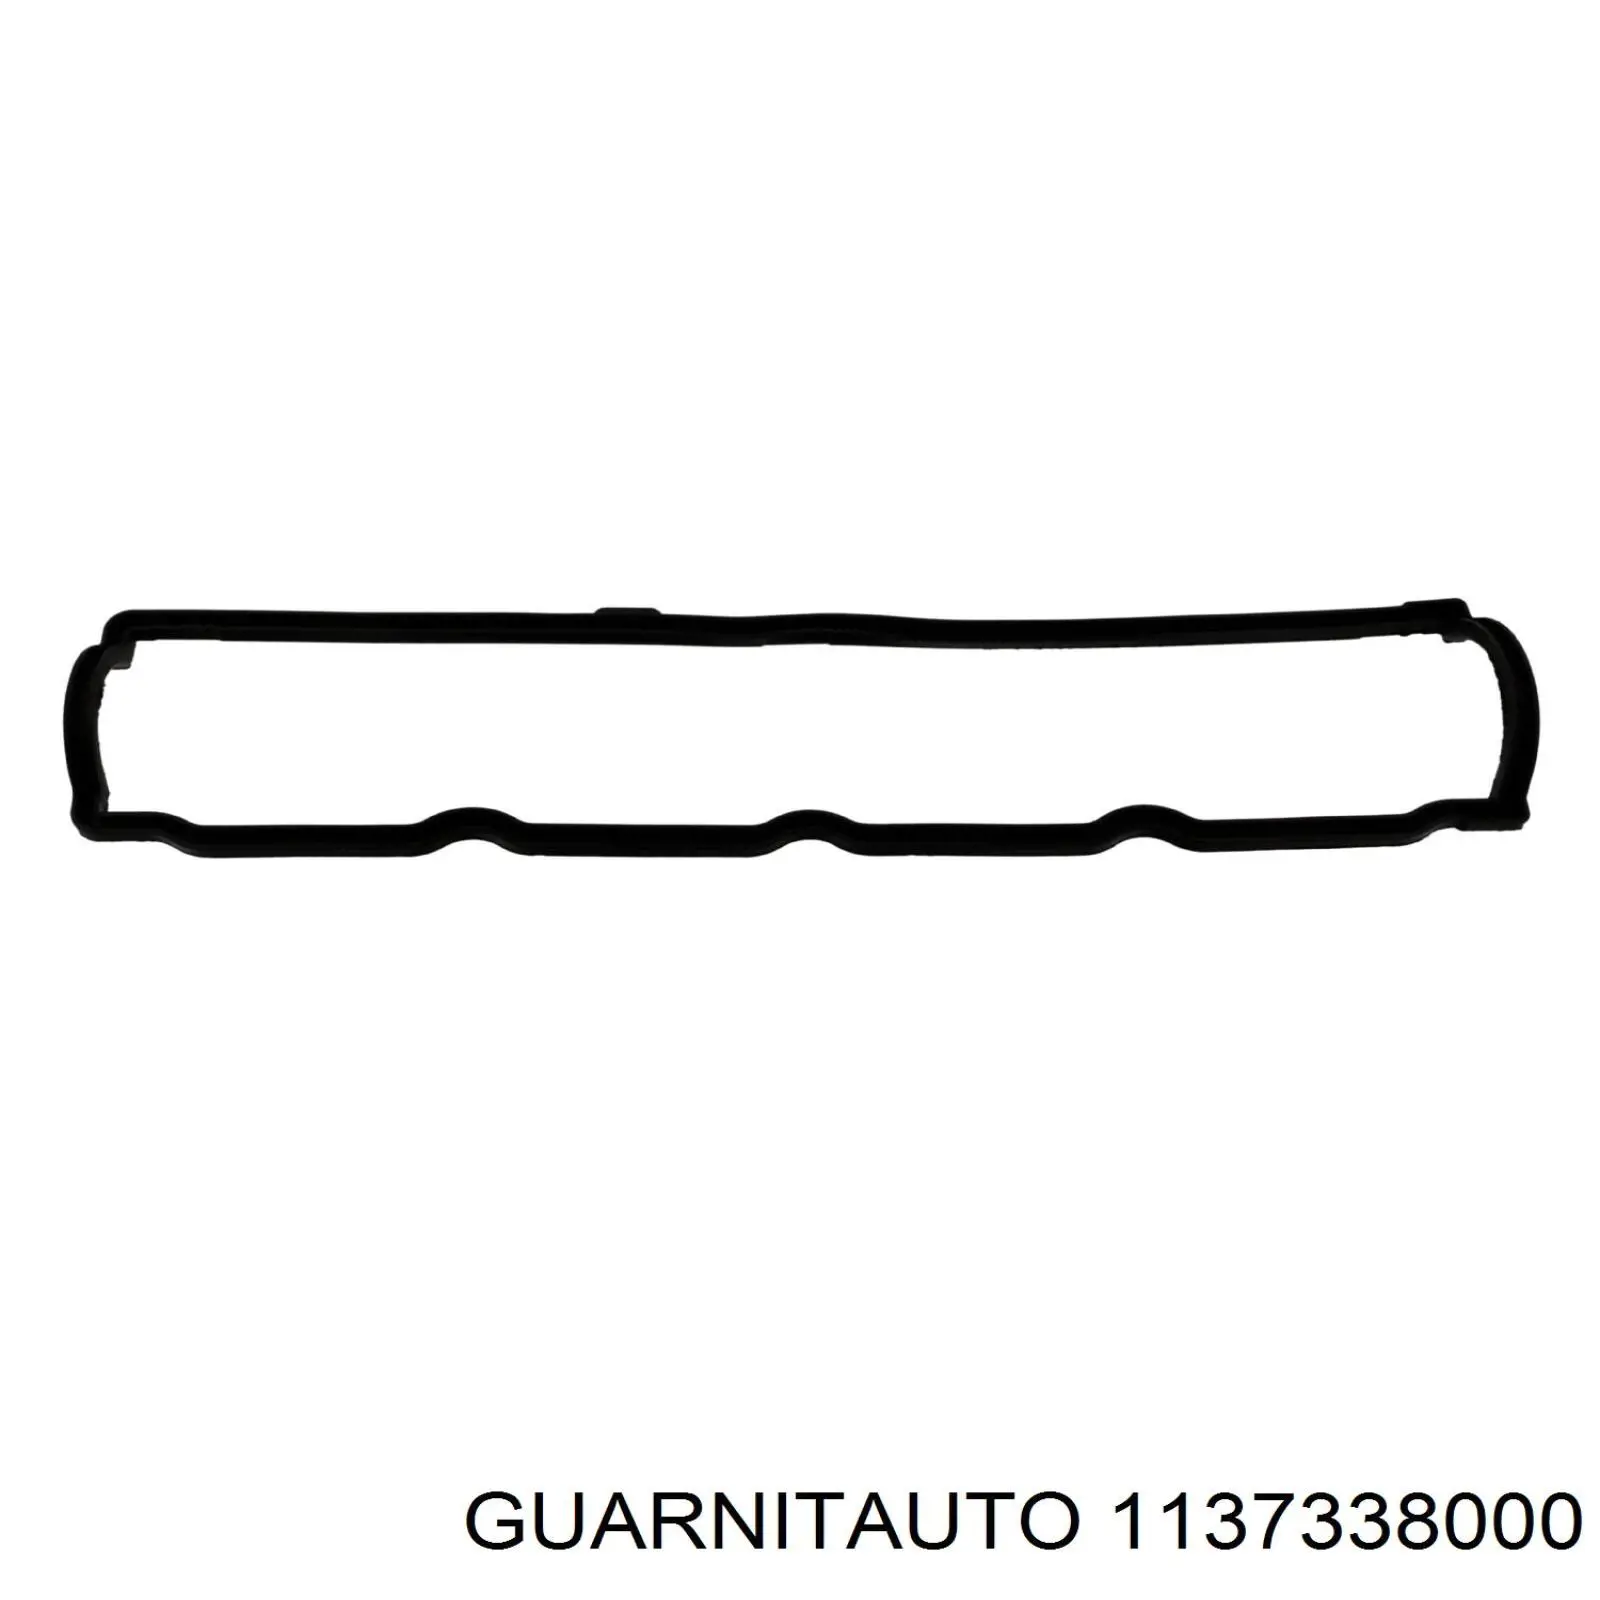 1137338000 Guarnitauto прокладка клапанной крышки